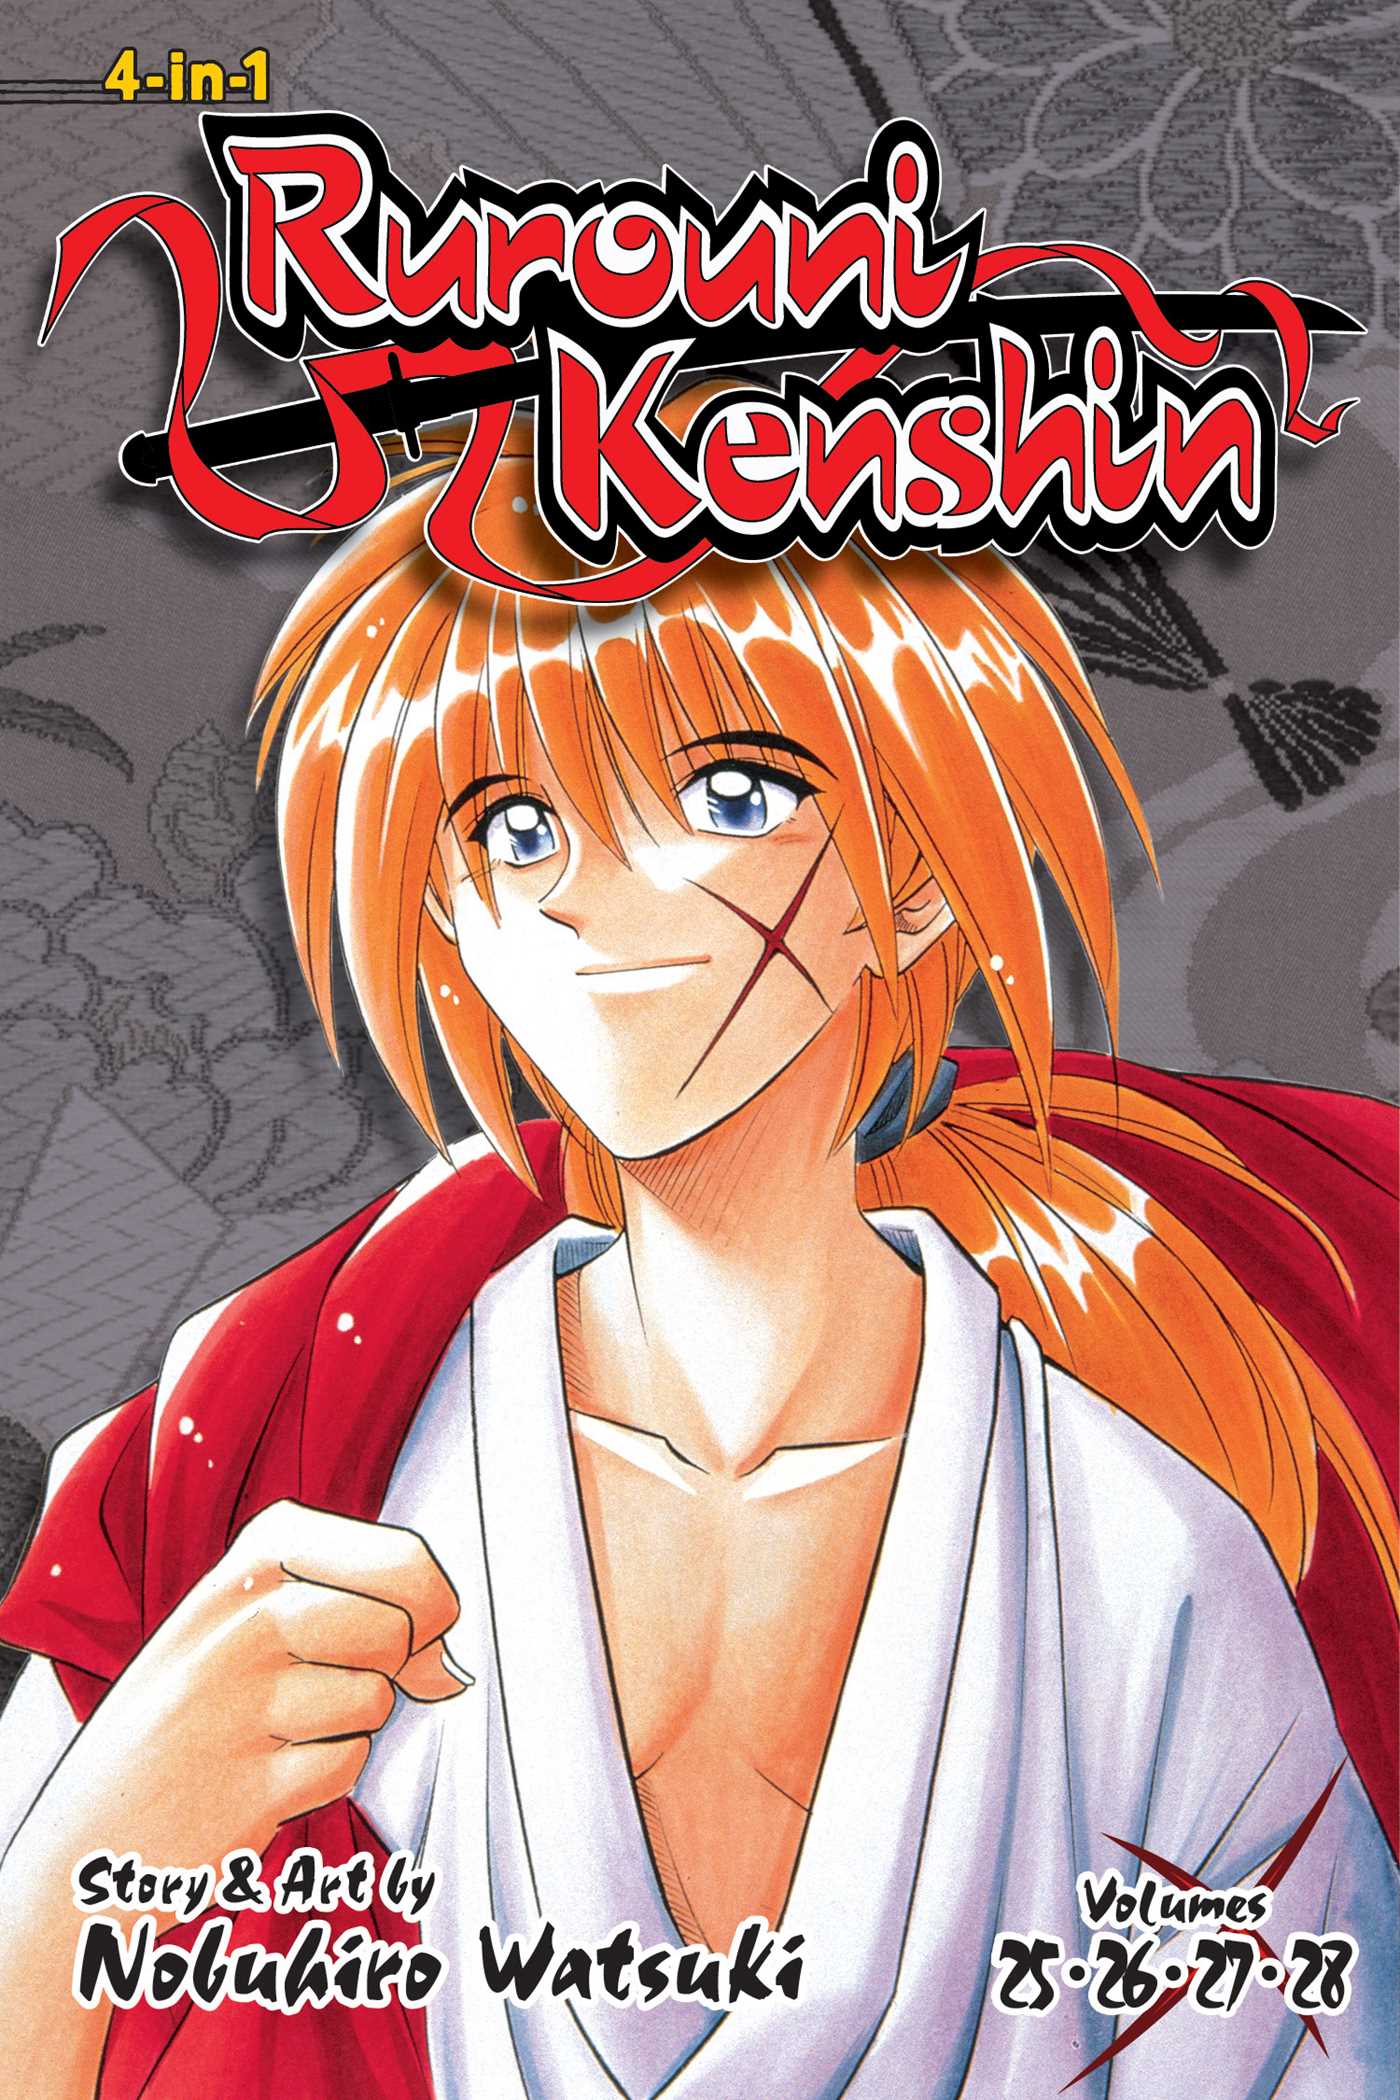 Rurouni Kenshin (4-in-1 Edition), Vol. 9 : Includes vols. 25, 26, 27 & 28 - Manga Warehouse